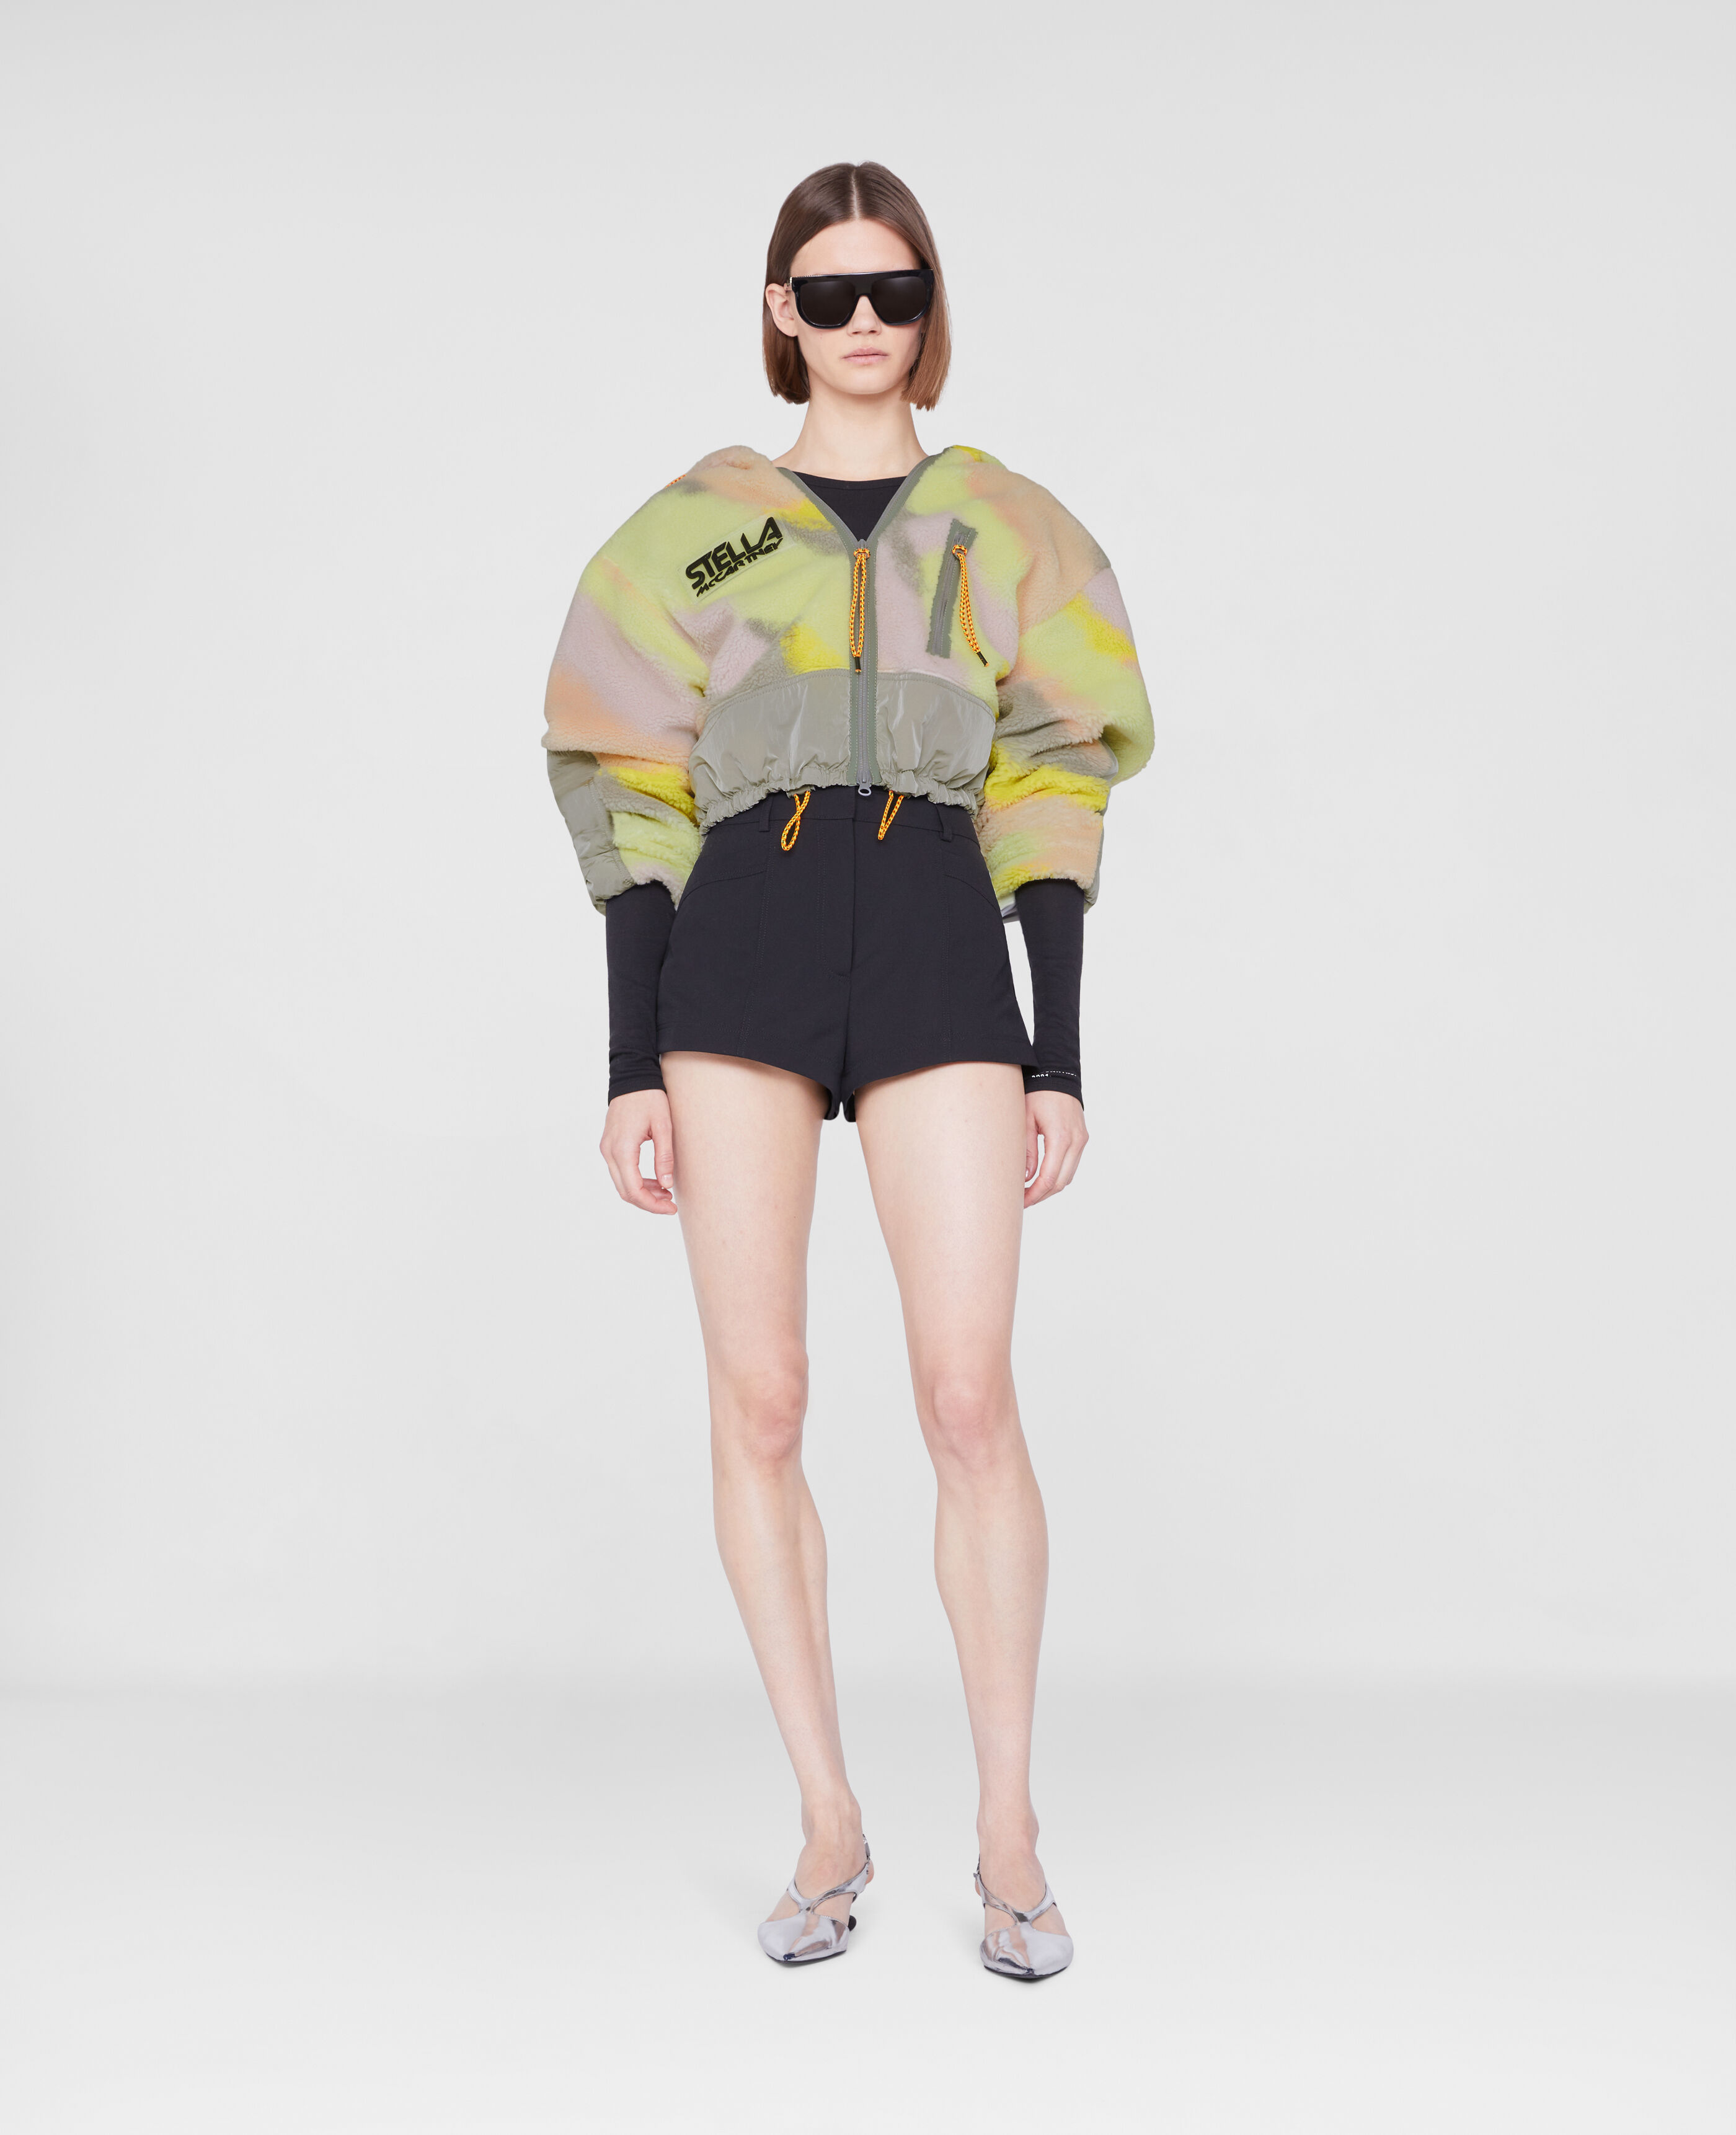 Women's Designer Coats & Jackets | Stella McCartney US